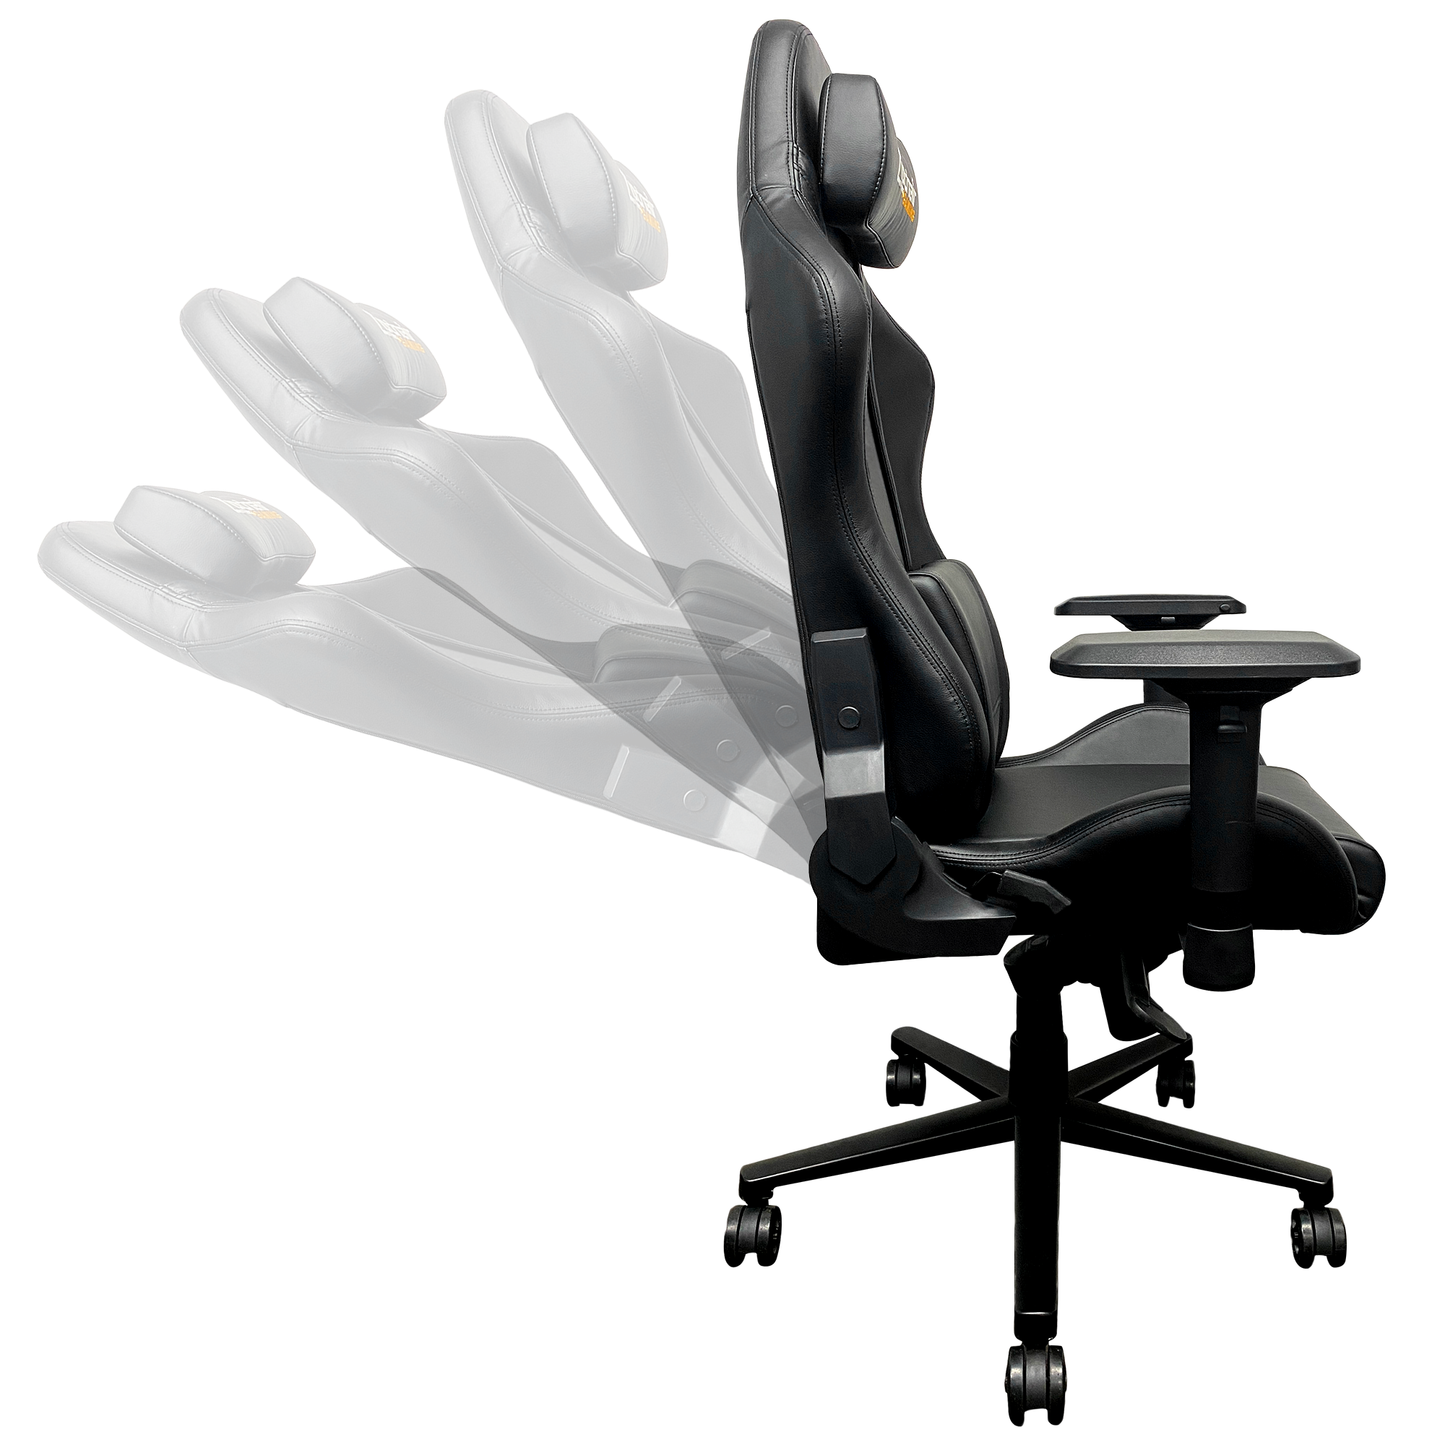 Xpression Pro Gaming Chair with LA Galaxy Wordmark Logo